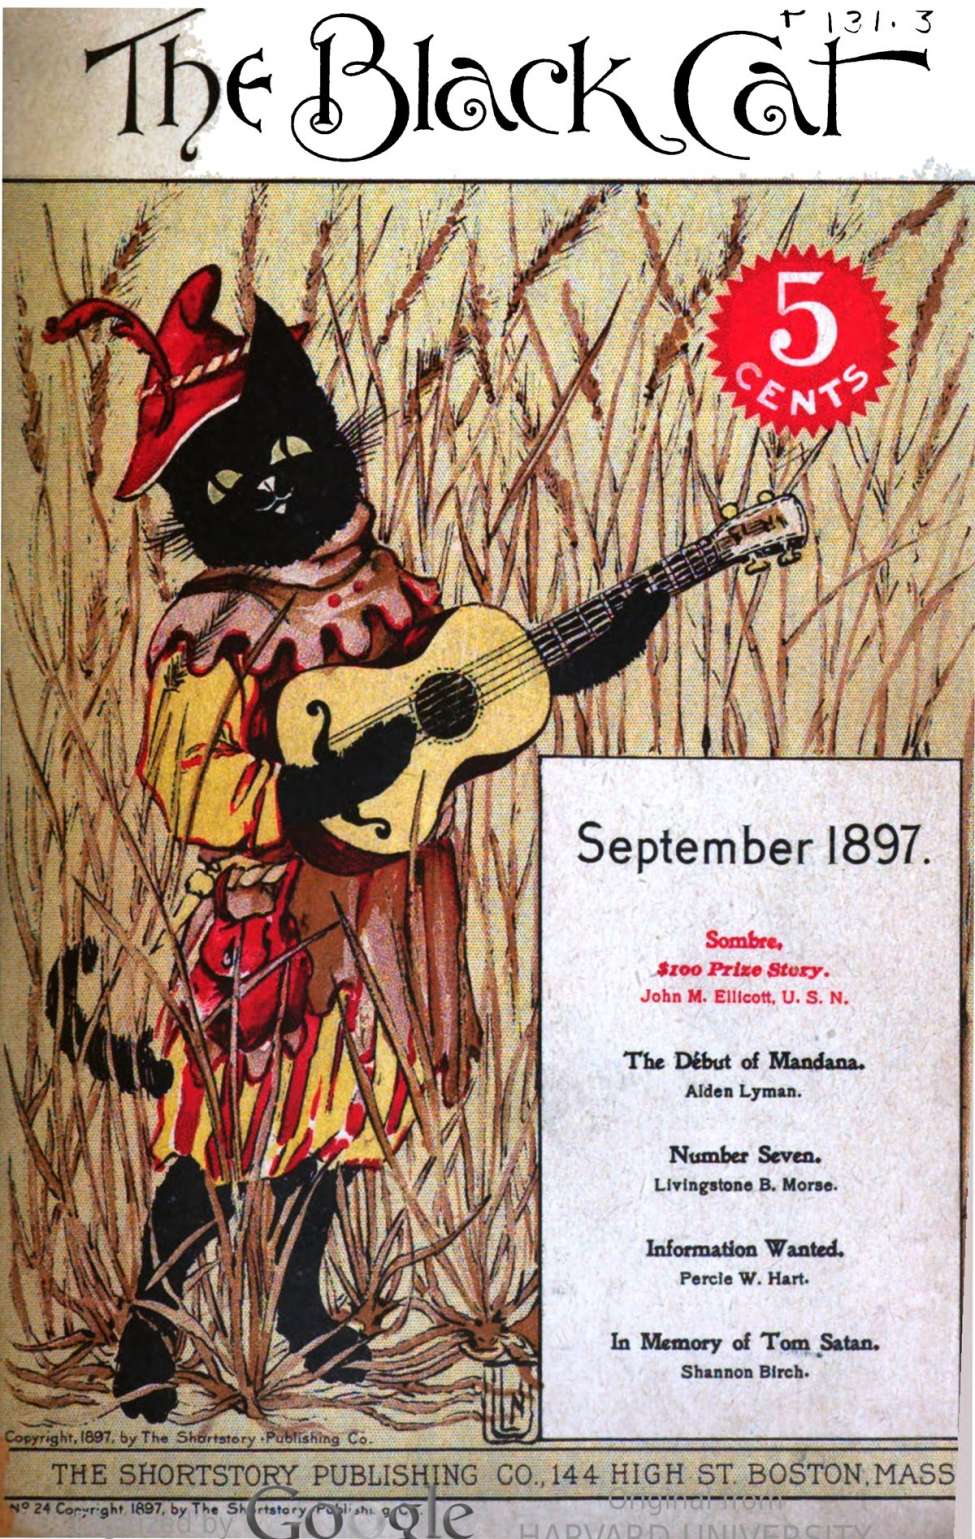 Book Cover For The Black Cat v2 12 - Sombre - John M. Ellicott U.S.N.